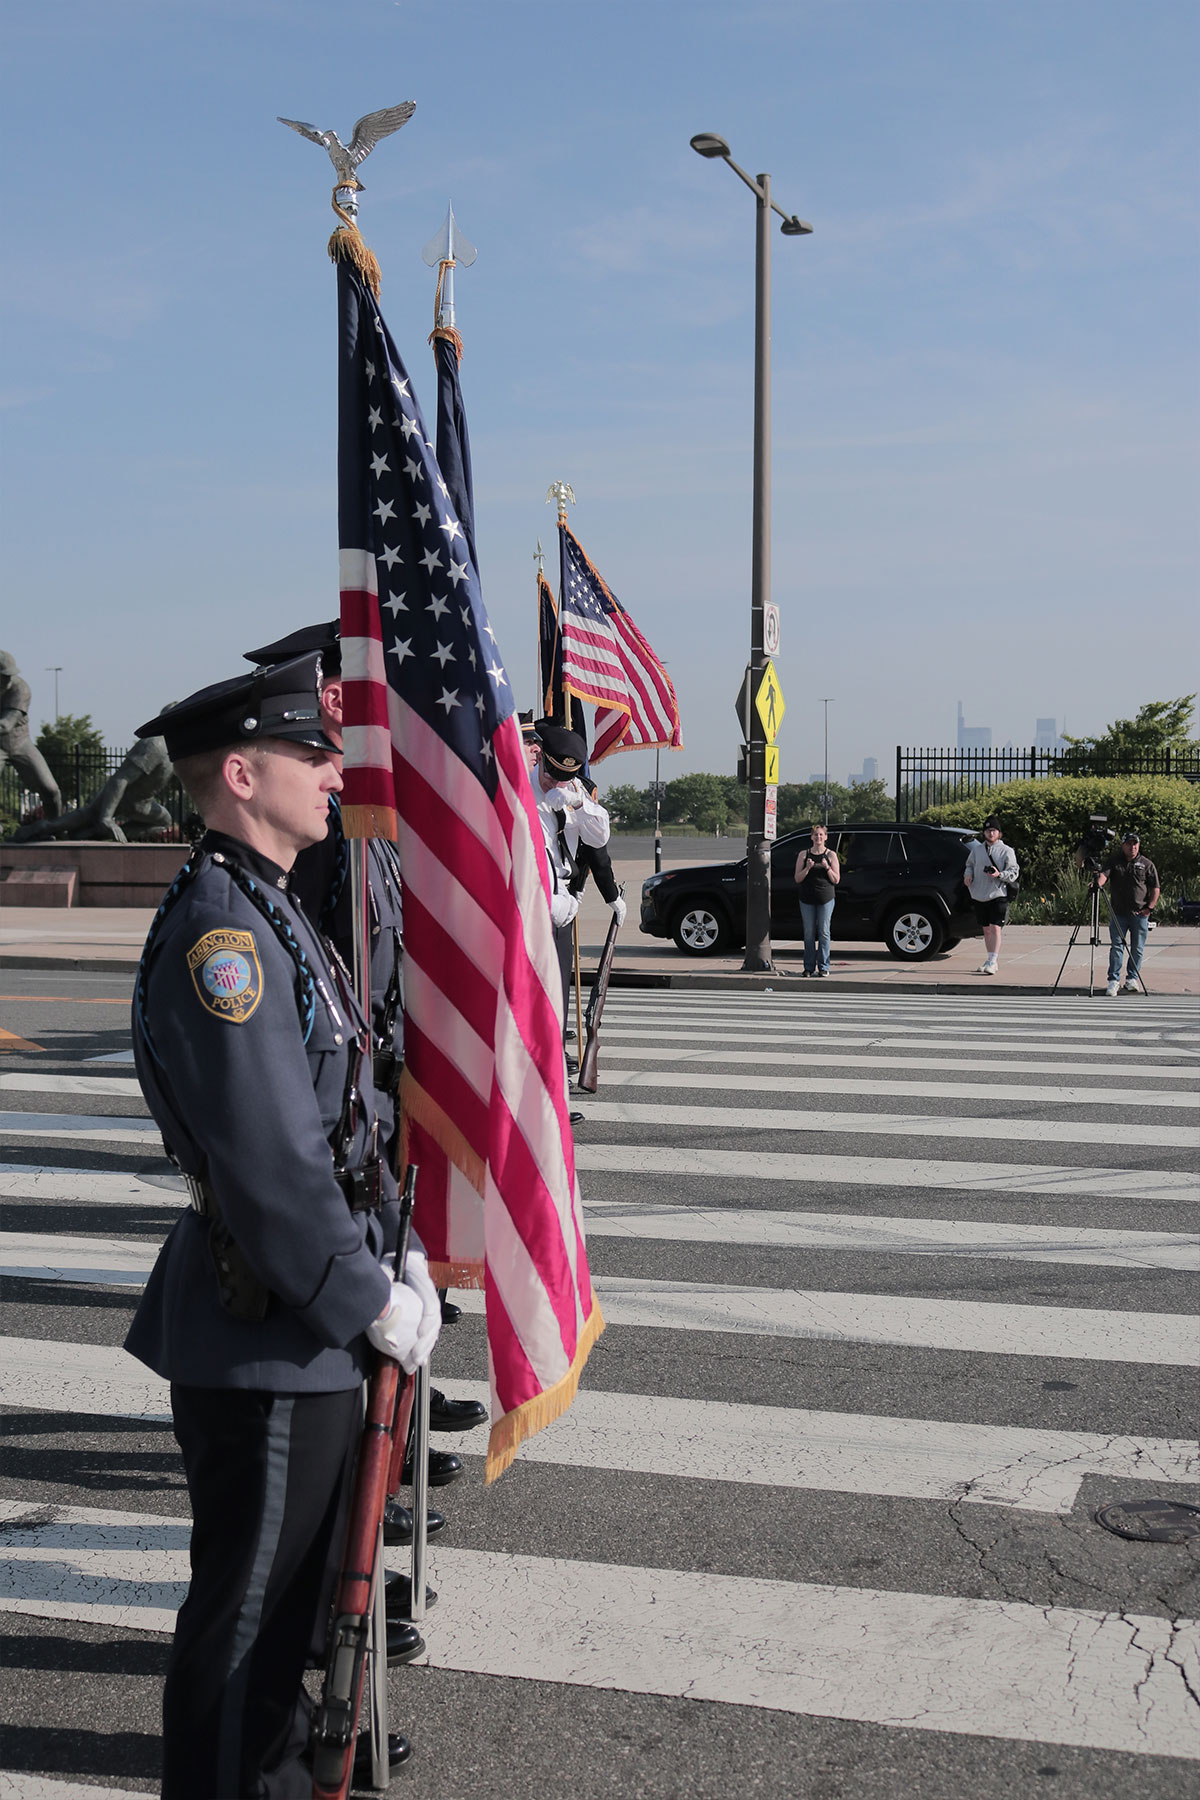 Law Enforcement Memorial Run